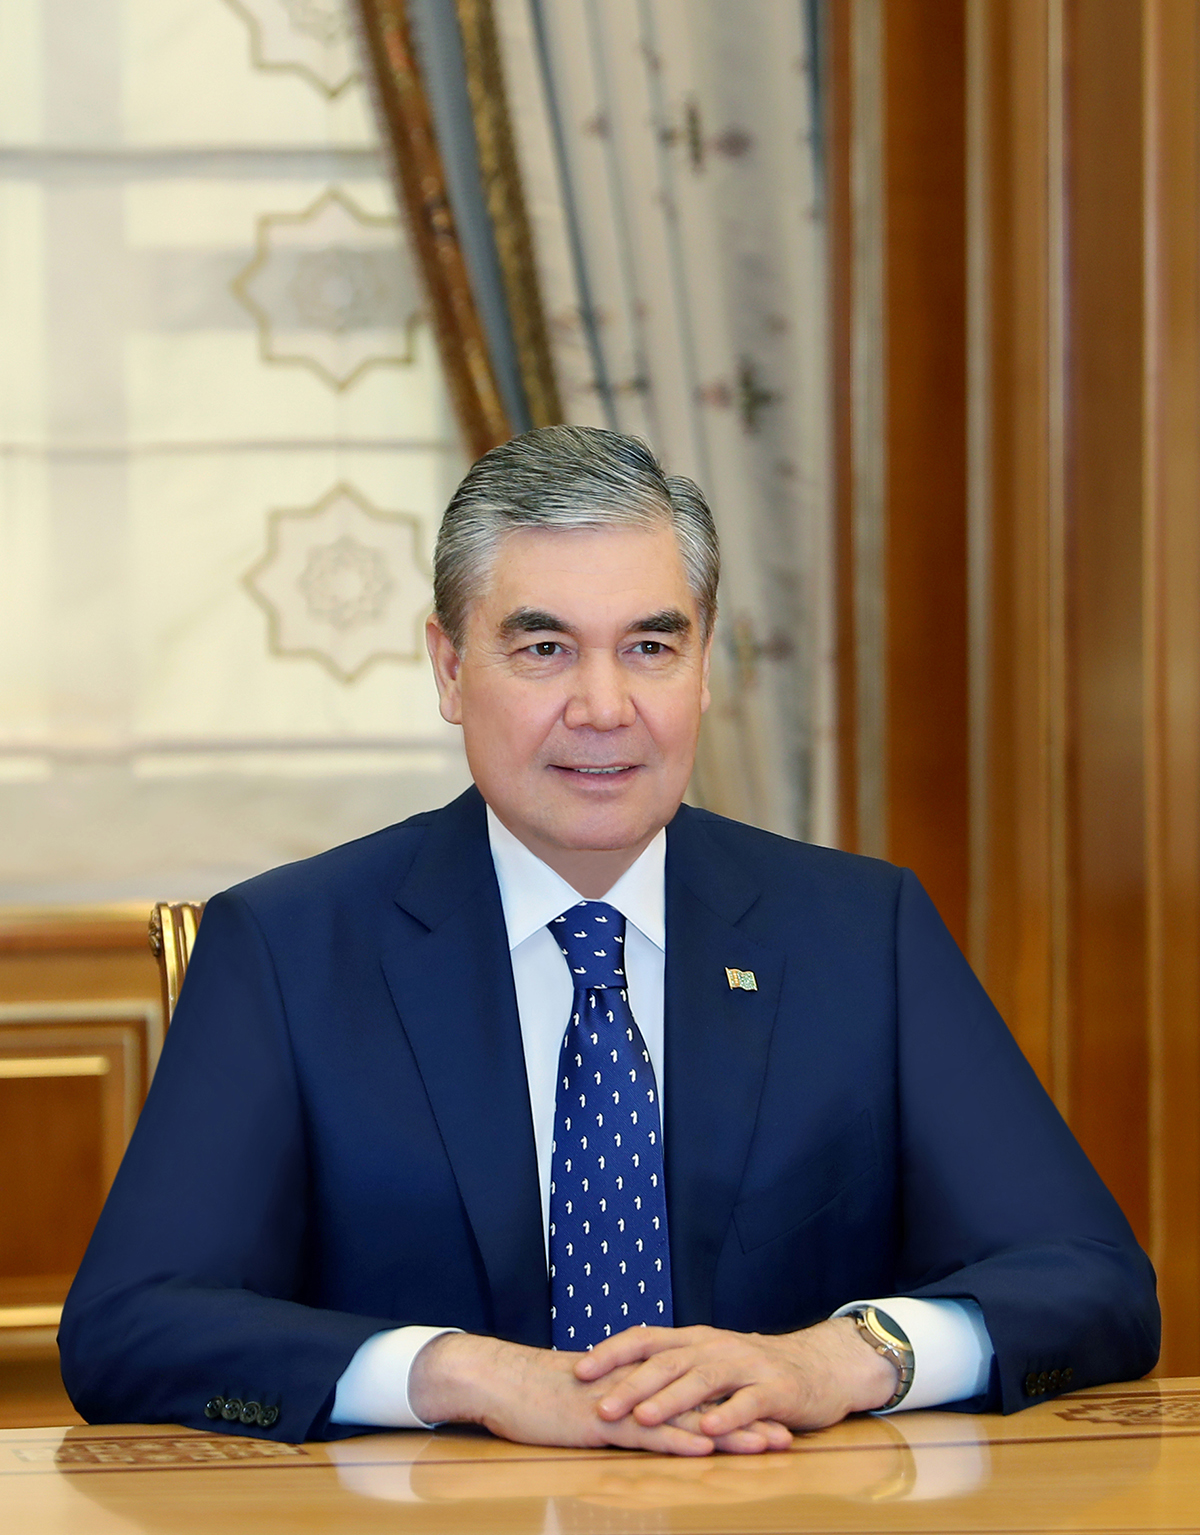 Türkmenistanyň Prezidenti “Lukoýl” açyk görnüşli paýdarlar jemgyýetiniň ýolbaşçysyny kabul etdi